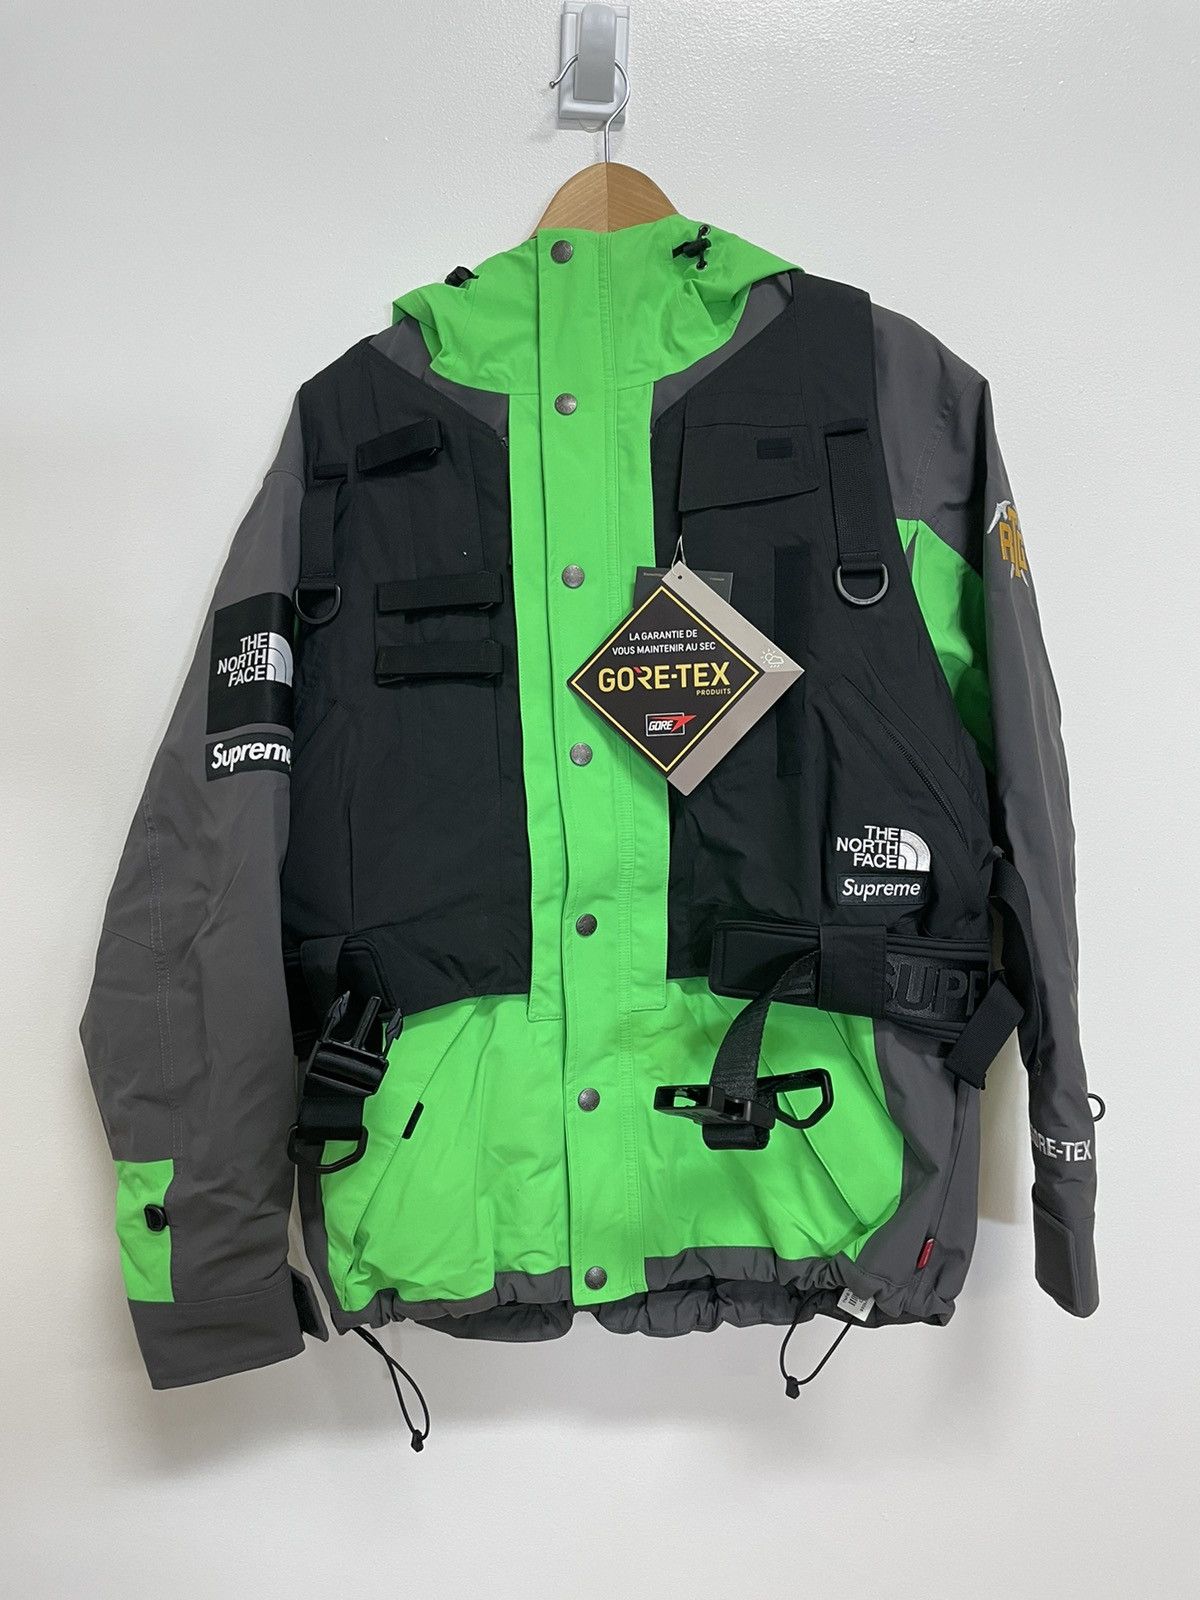 Supreme Supreme North Face RTG Gortex Jacket and Vest - Green | Grailed